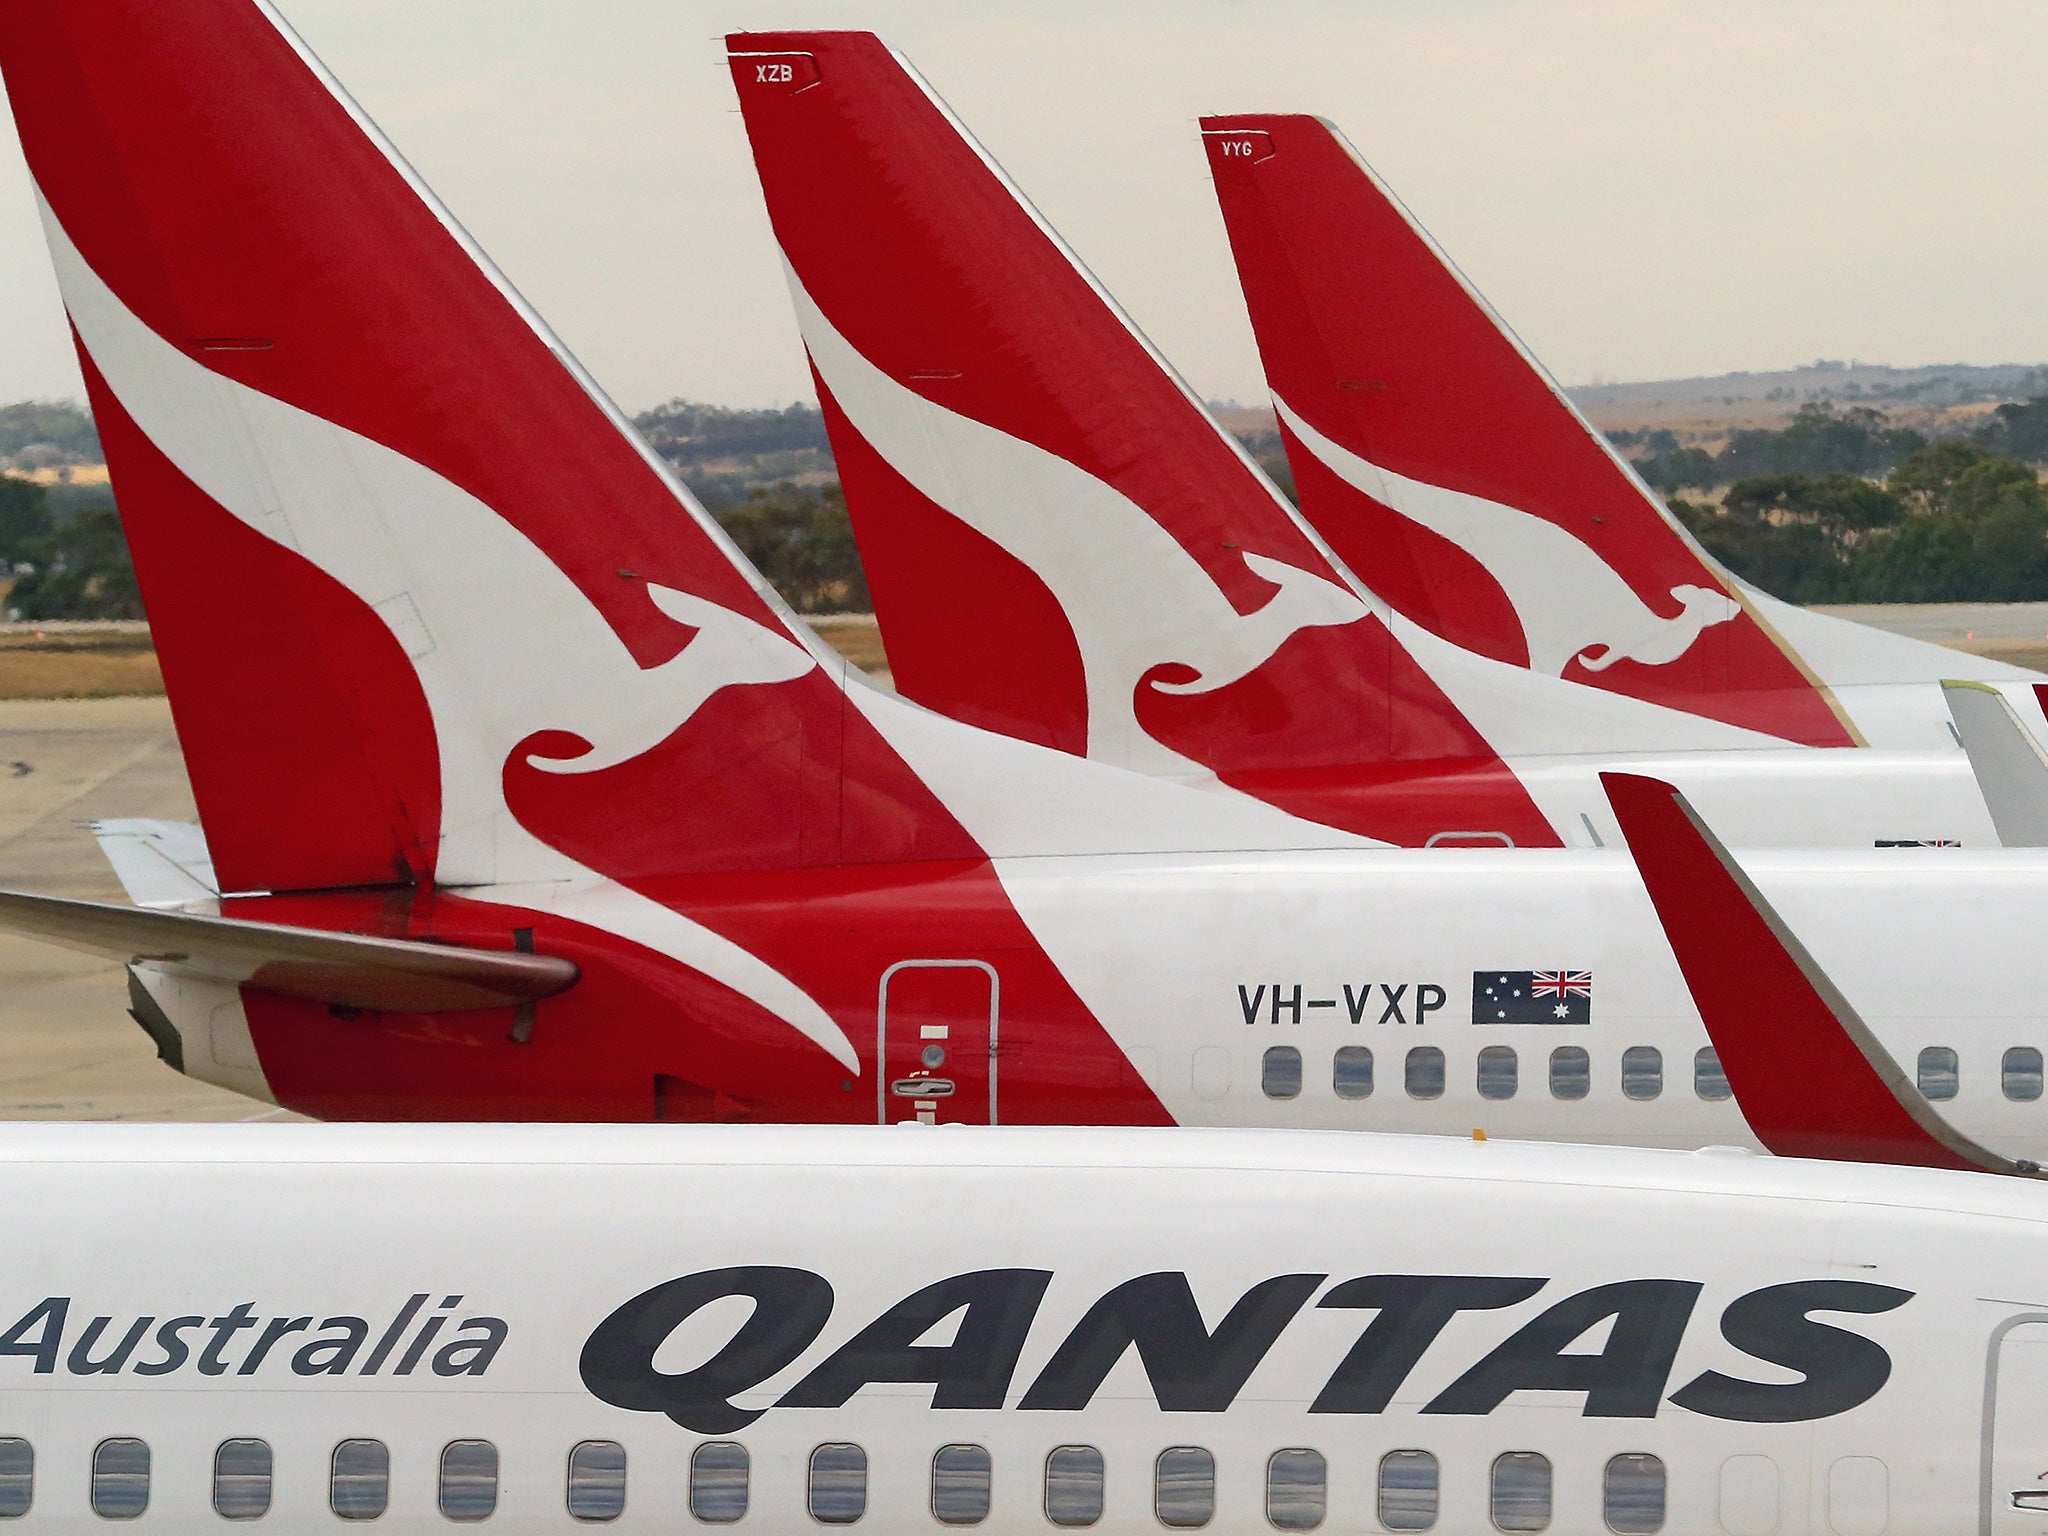 Qantas currently flies daily from Heathrow to Melbourne and Sydney, both via Dubai